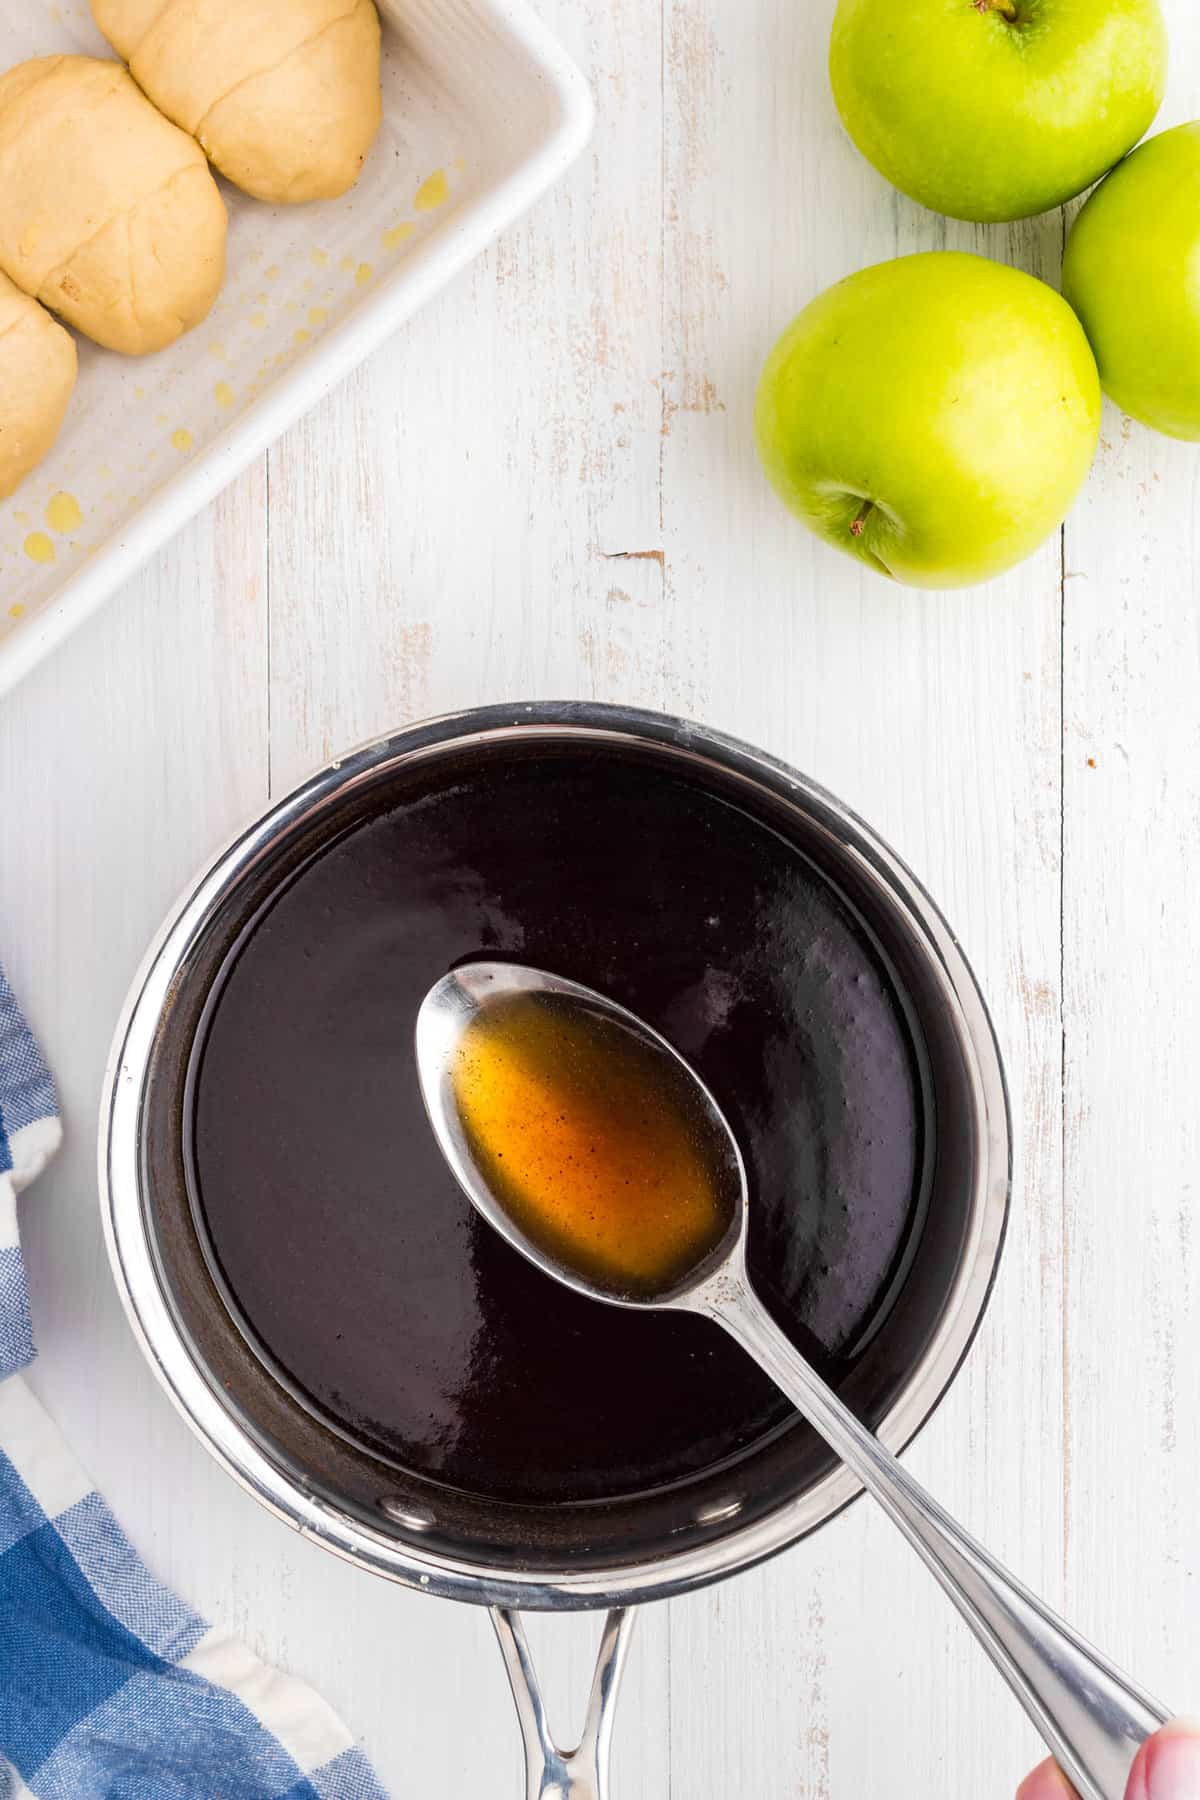 Syrup mixture in saucepan for Apple Dumpling recipe